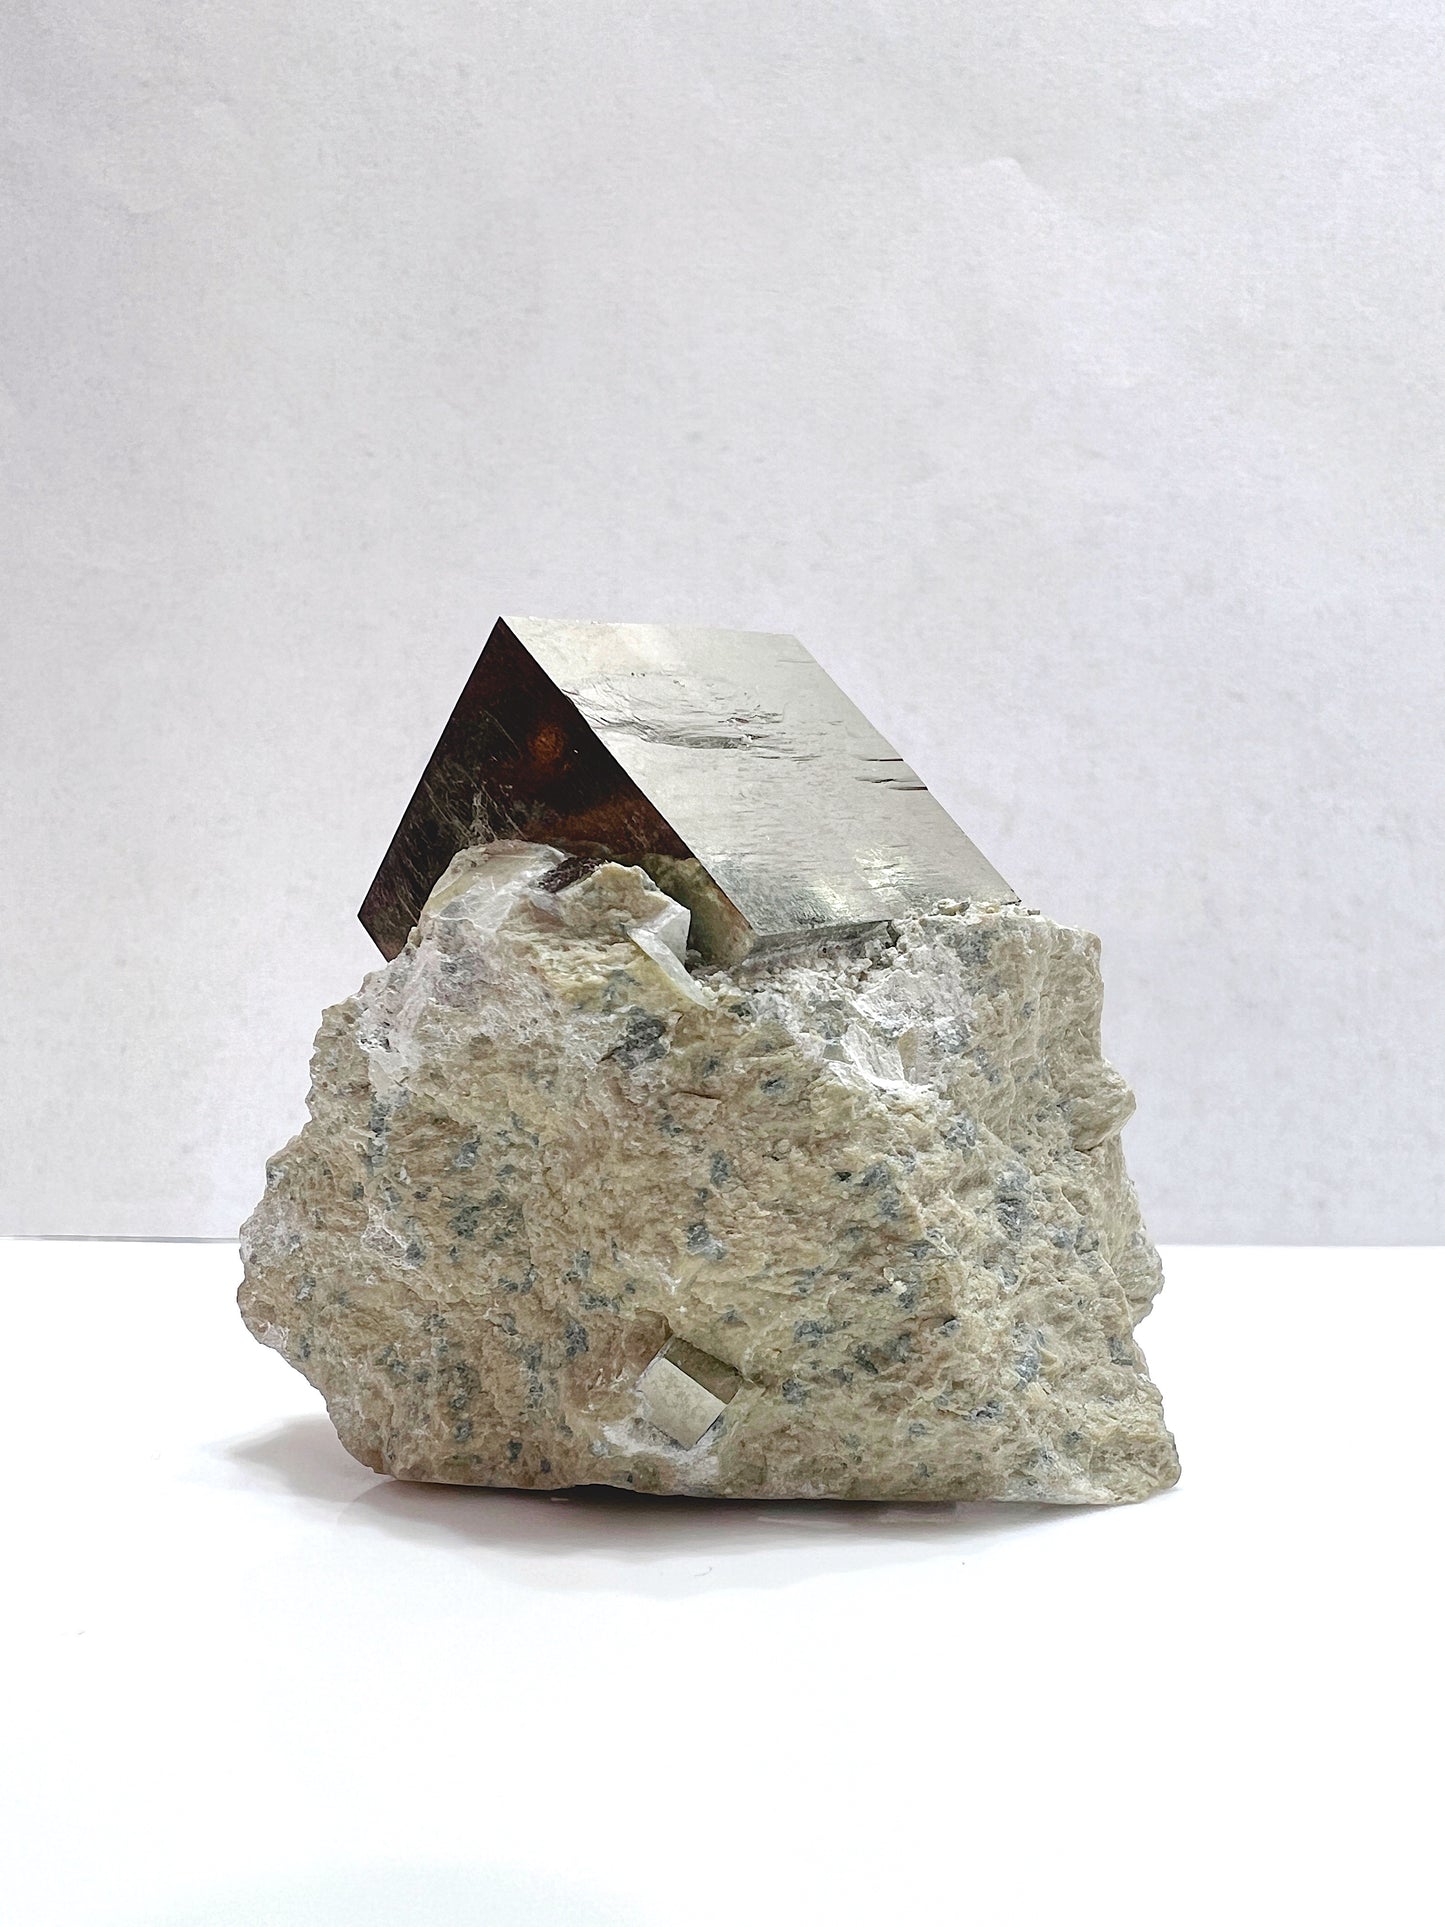 [Crystal] Pyrite on Matrix | Unique Crystal Specimen | Spain